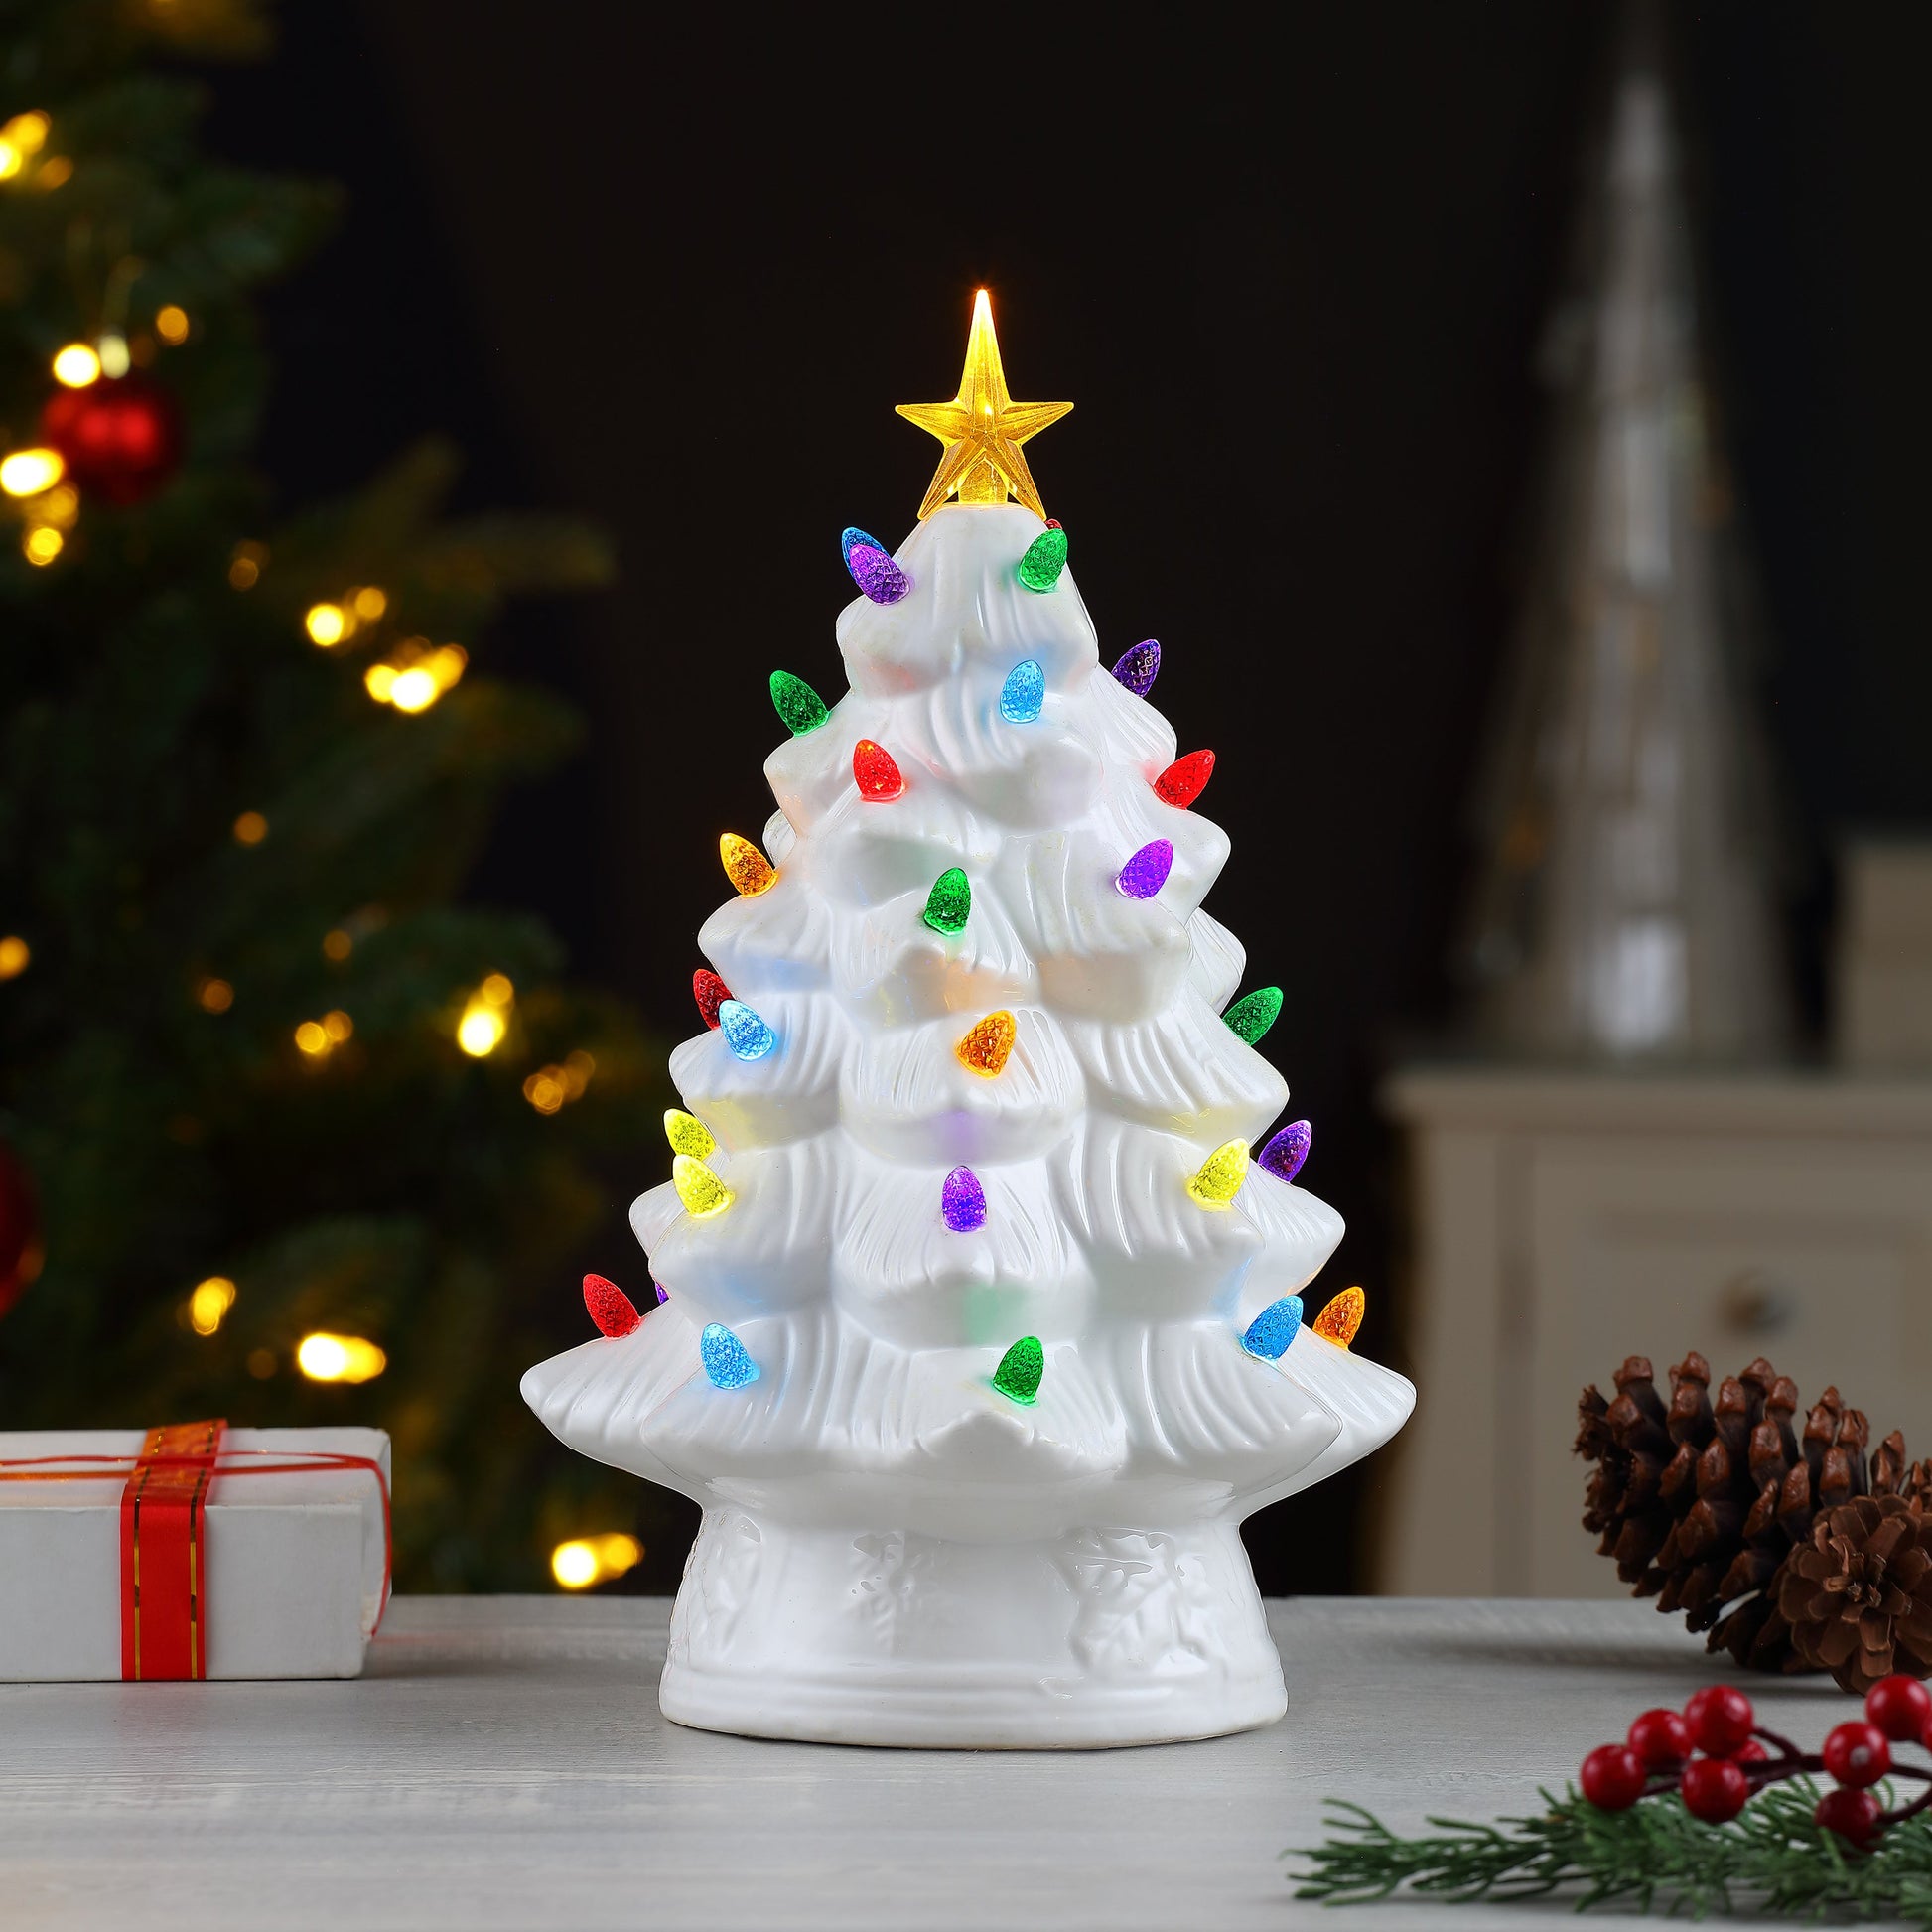 12" Nostalgic Ceramic Tree - White - Mr. Christmas